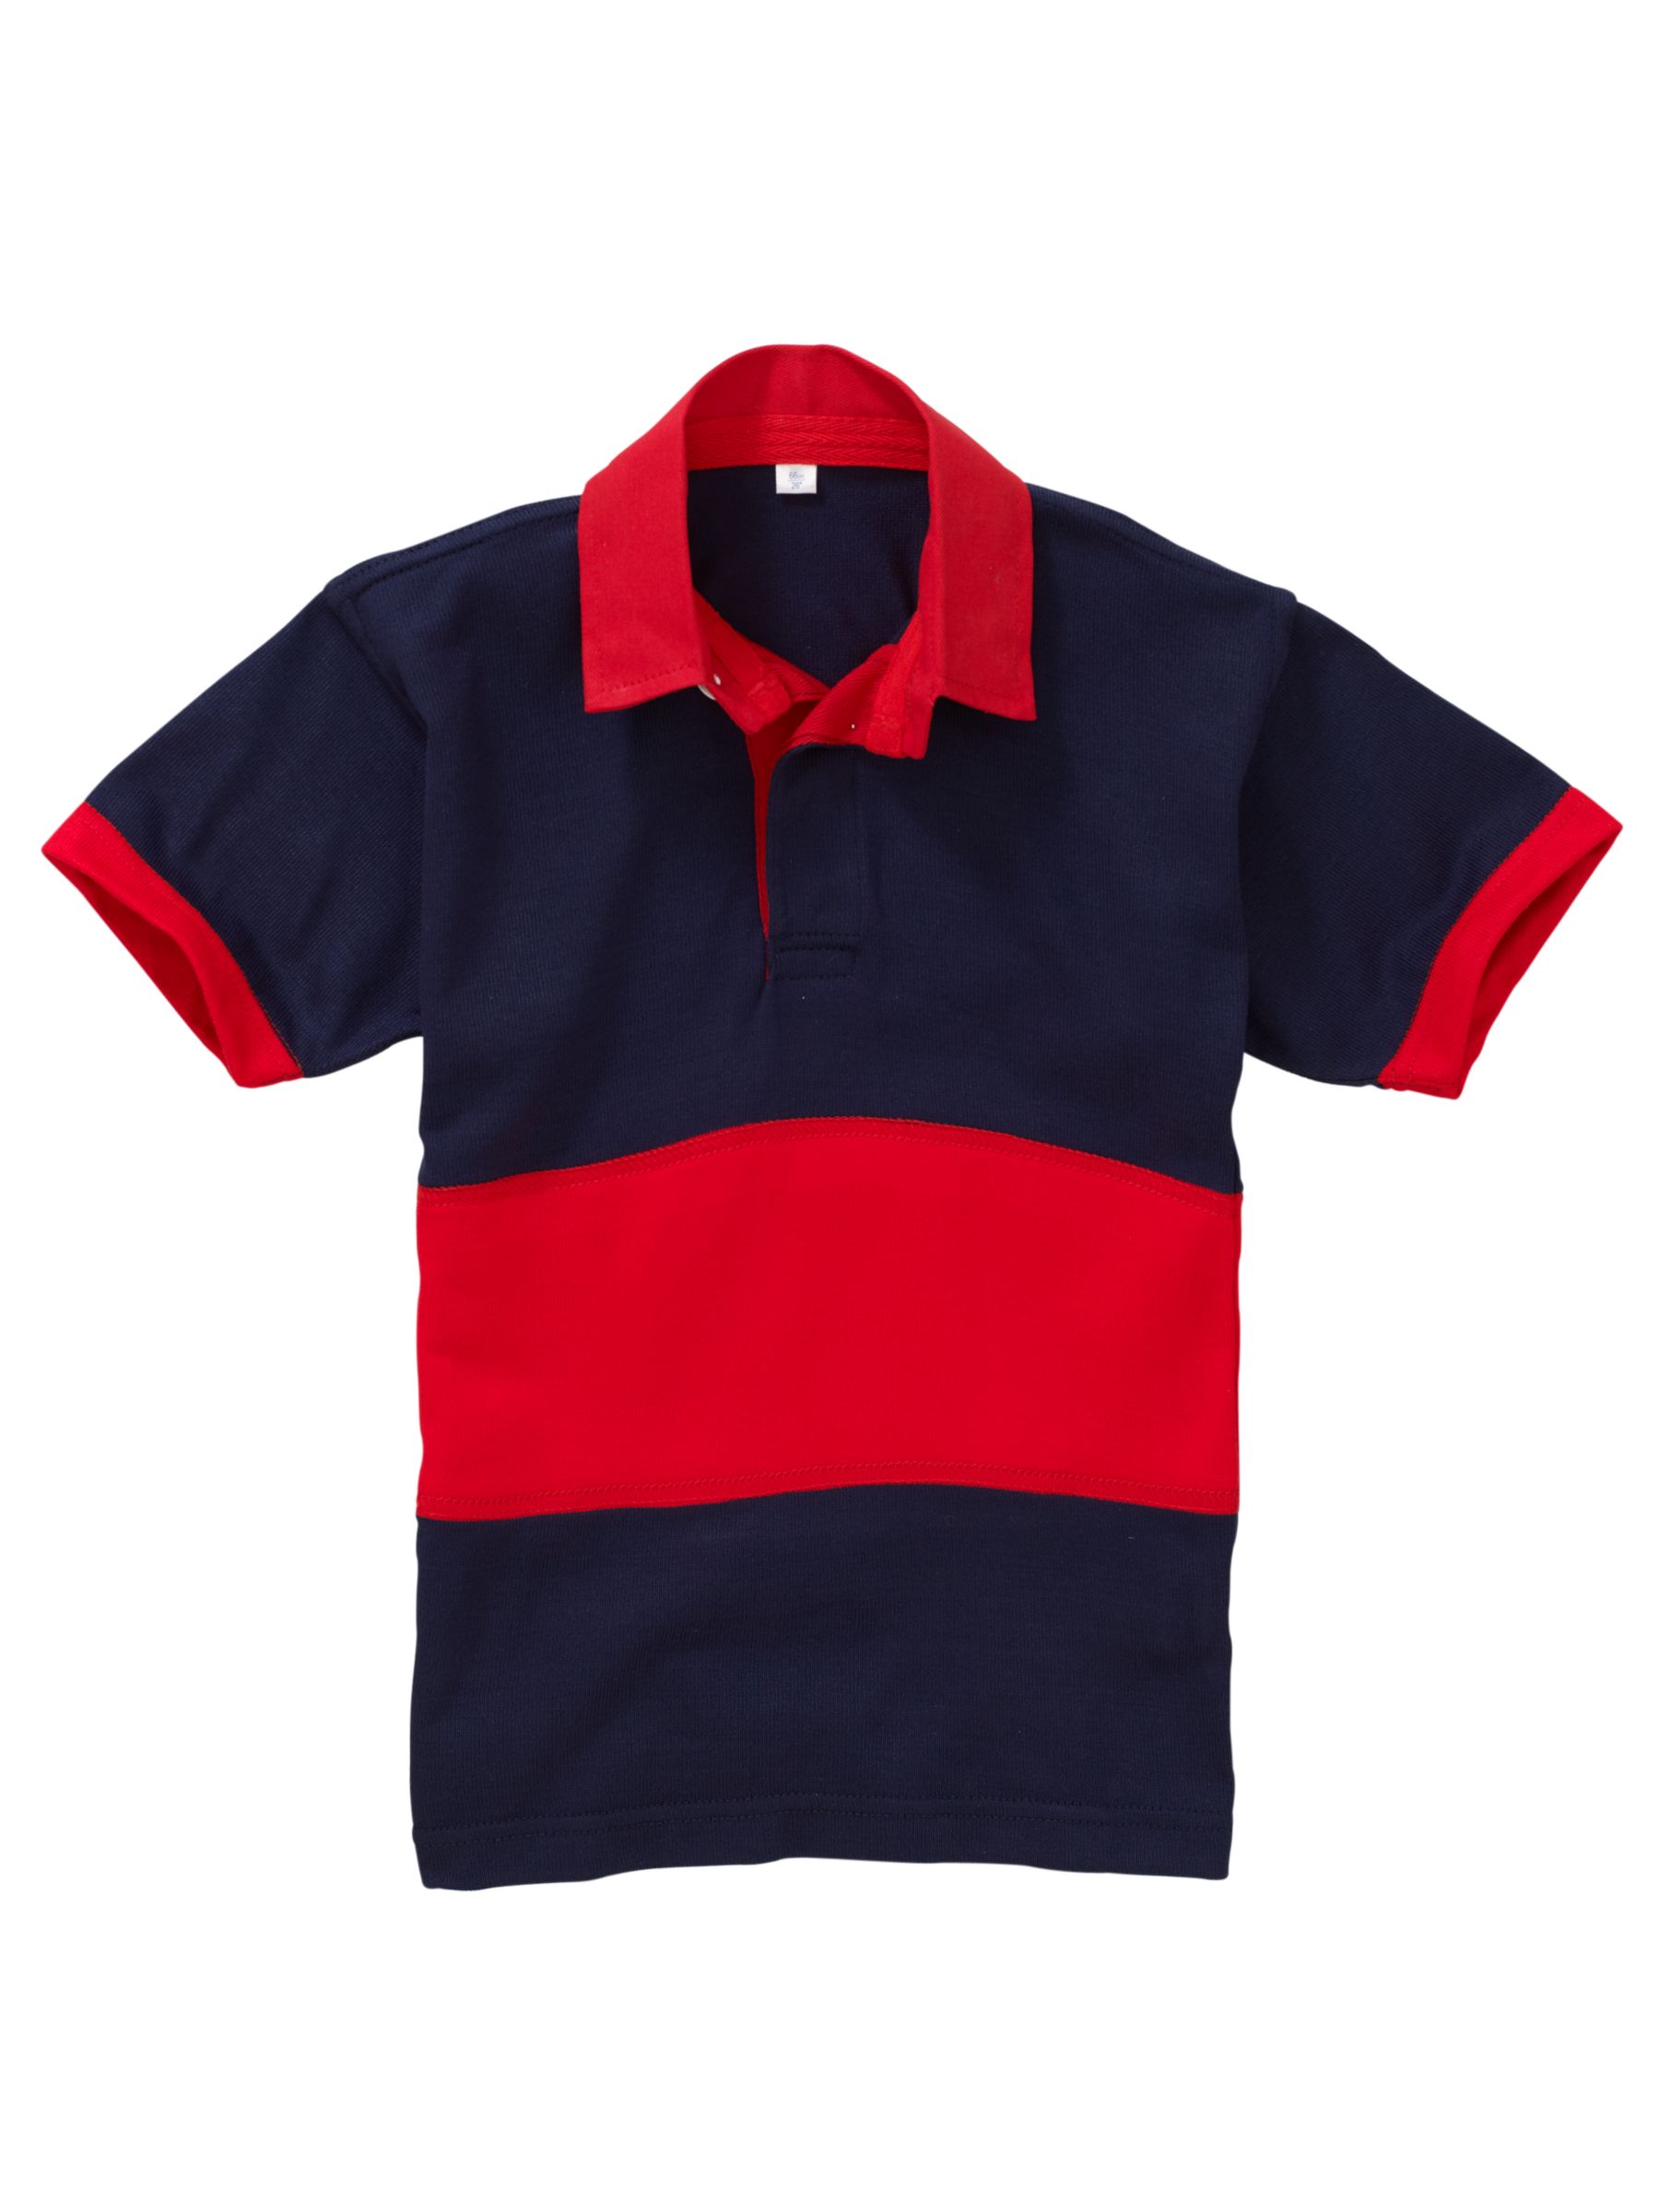 School Boys Rugby Shirt, Blue/red